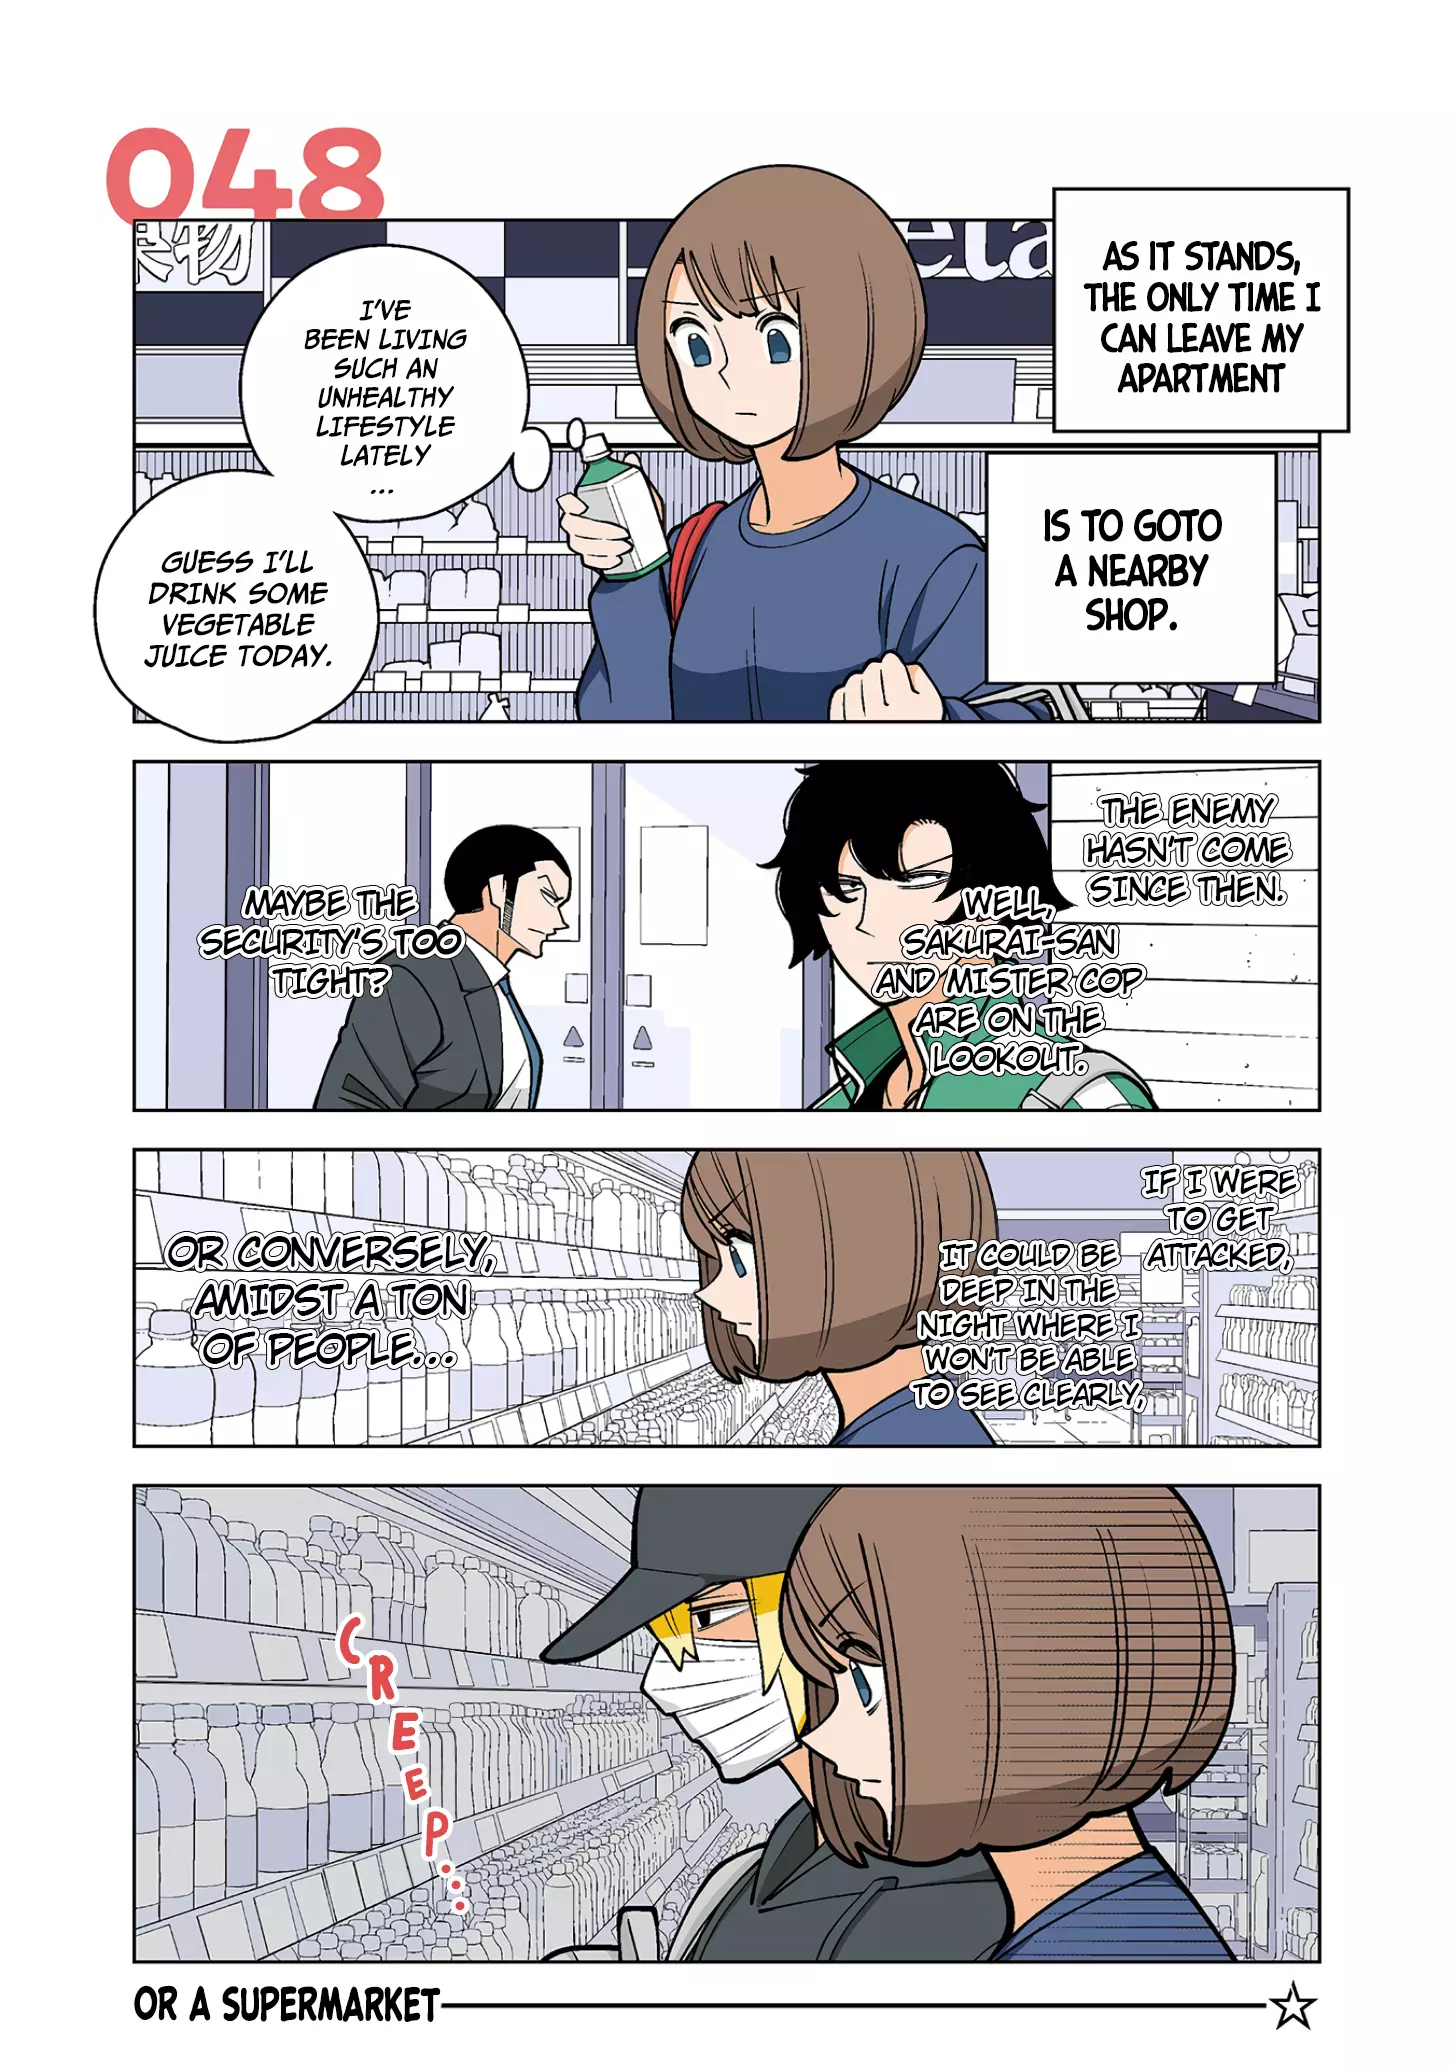 Kanako's Life As An Assassin - 48 page 1